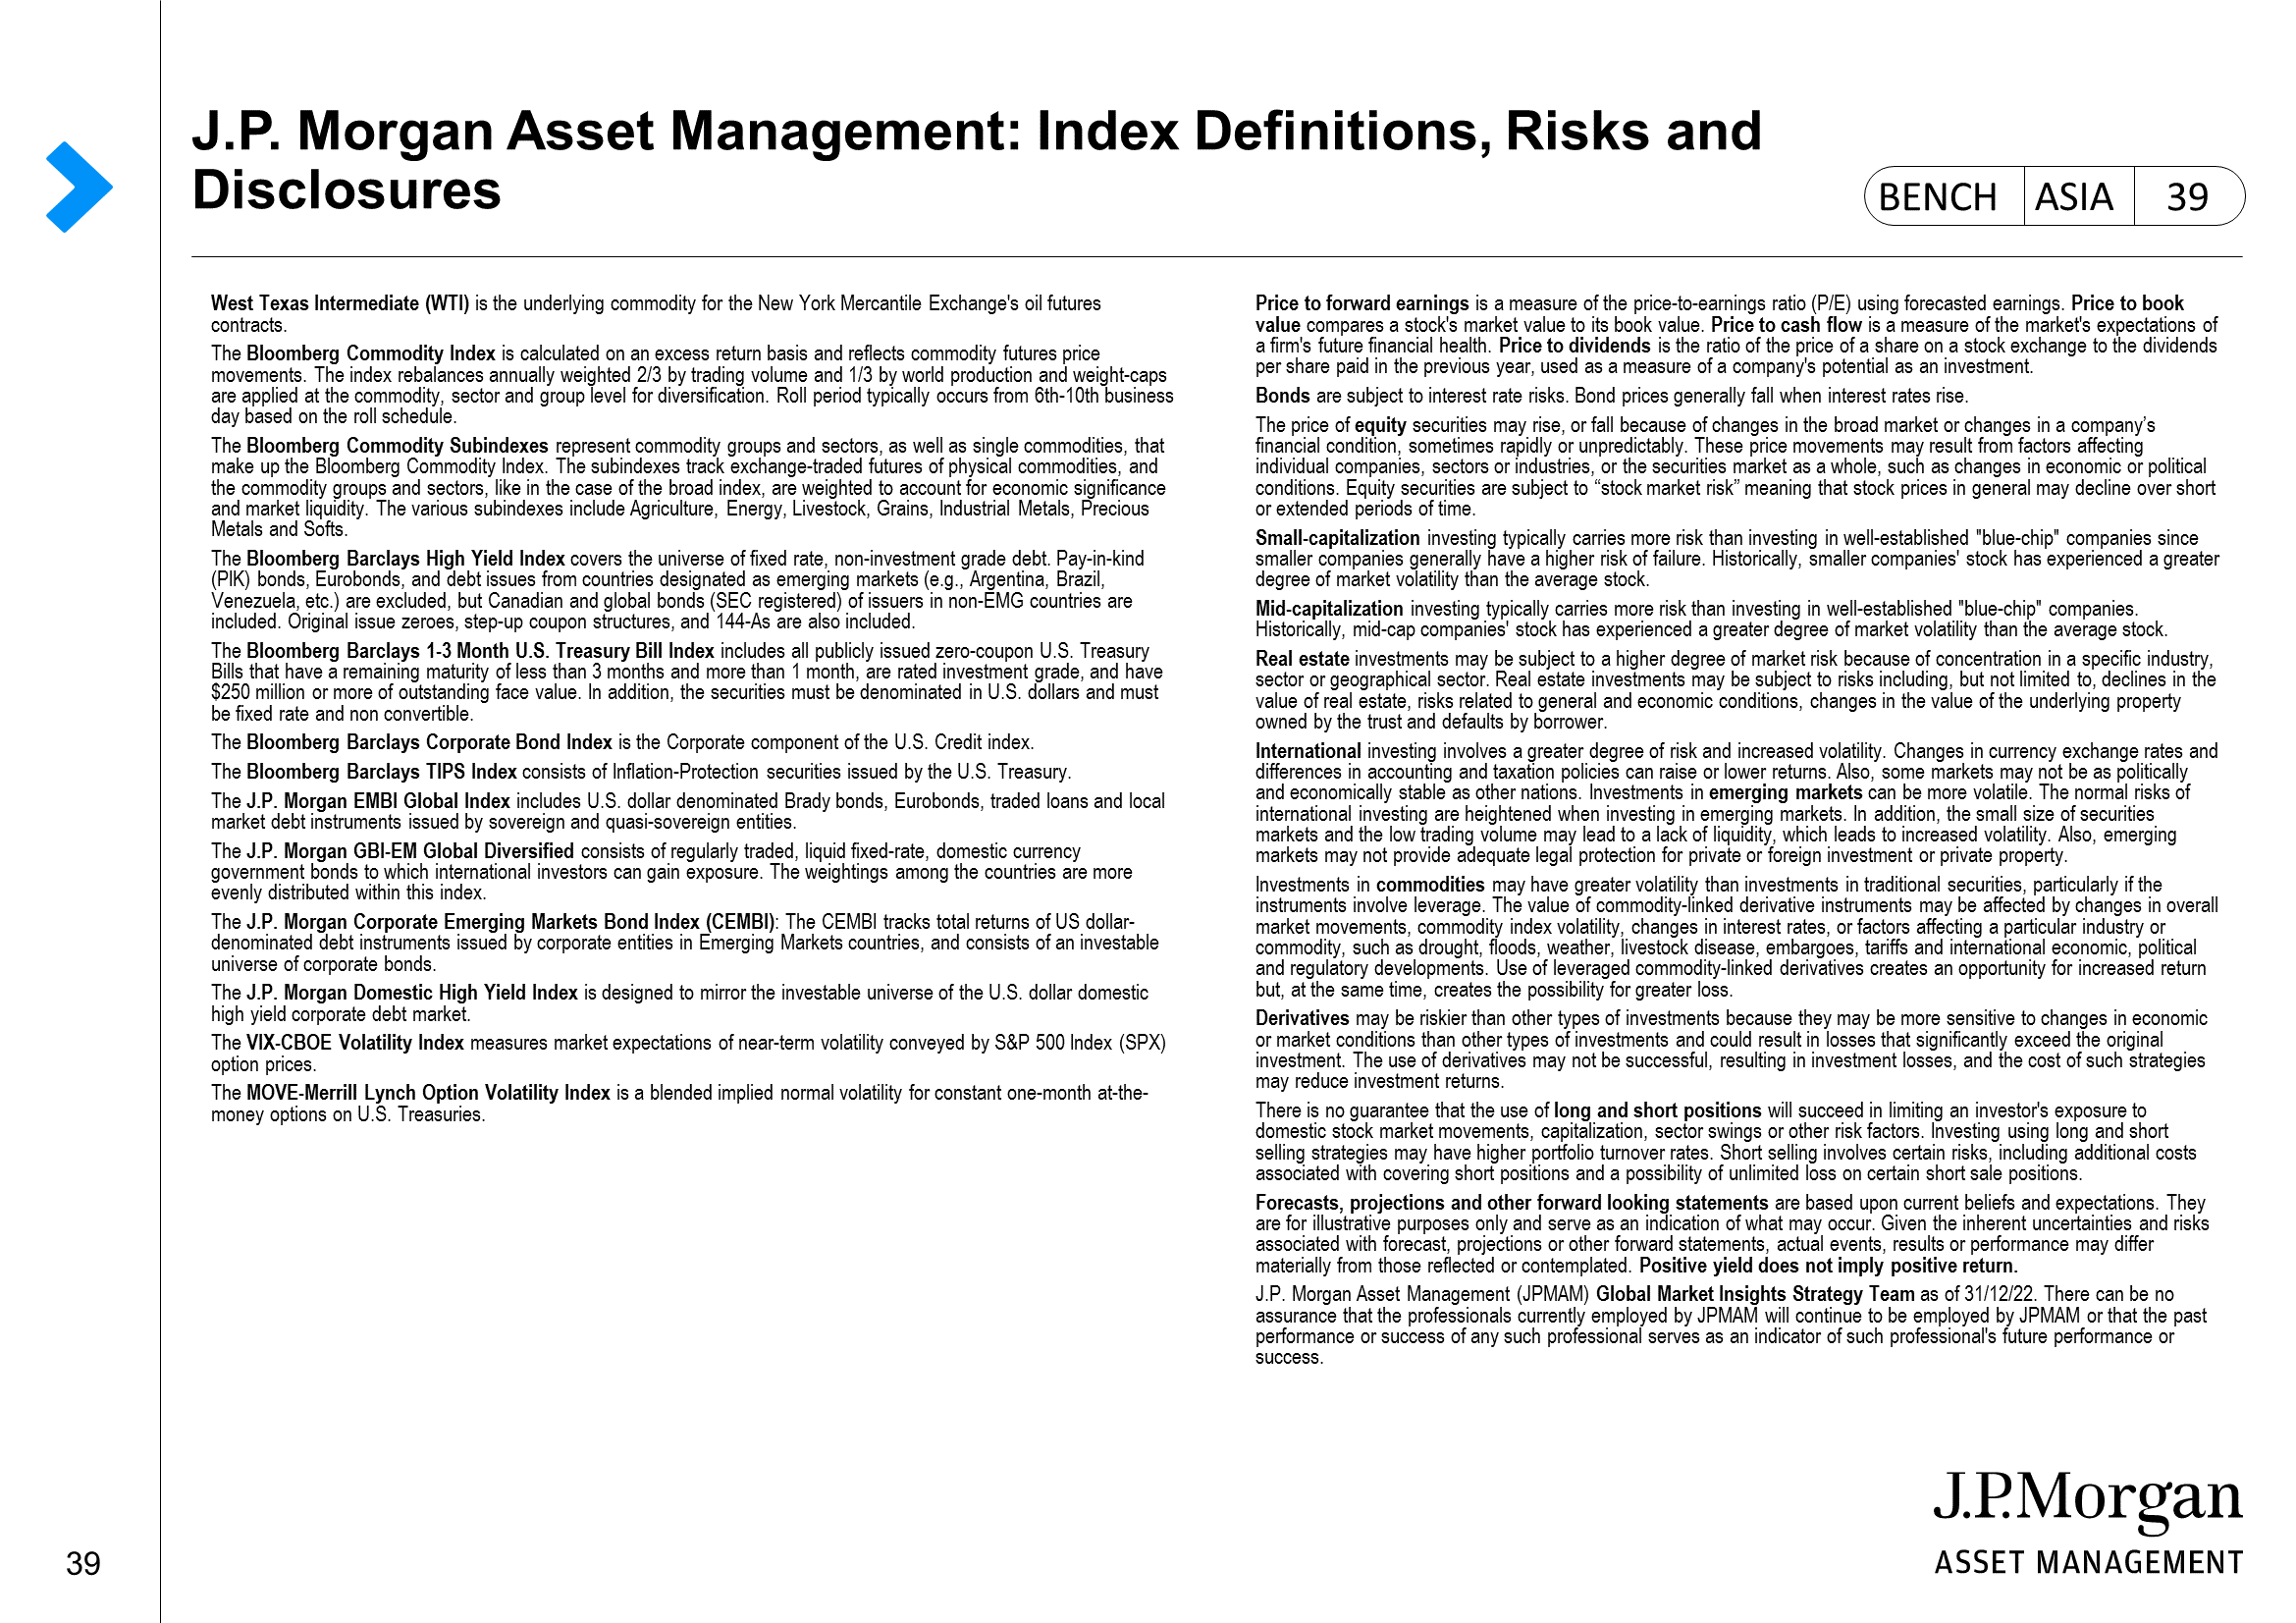 J.P. Morgan Asset Management: Index Definitions, Risks and Disclosures